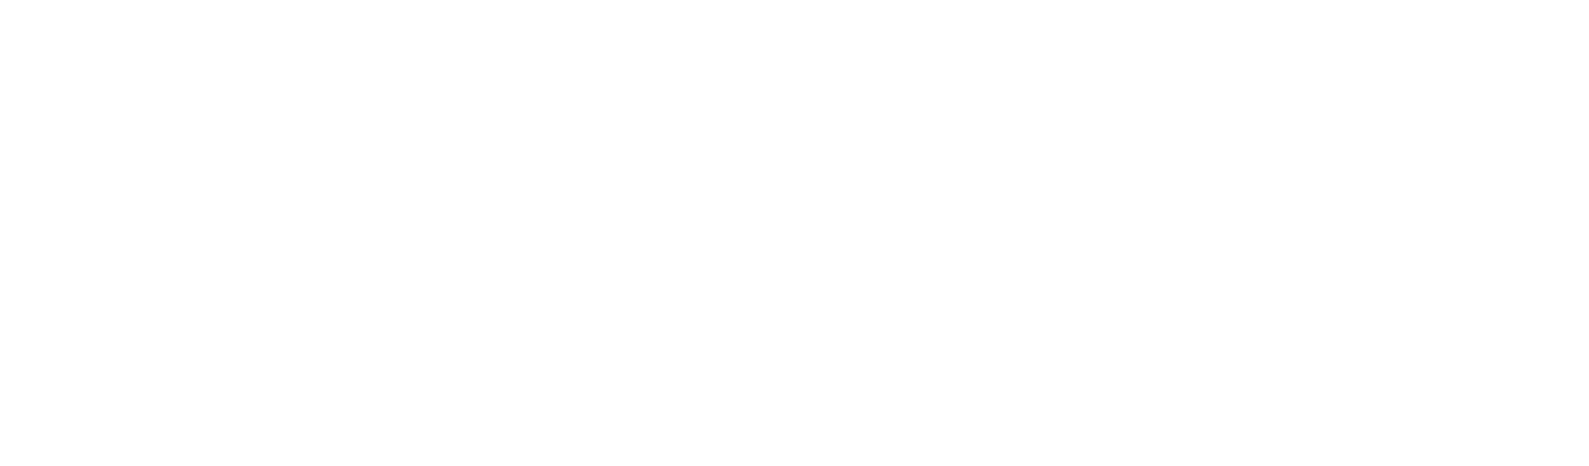 E.ON logo for dark backgrounds (transparent PNG)